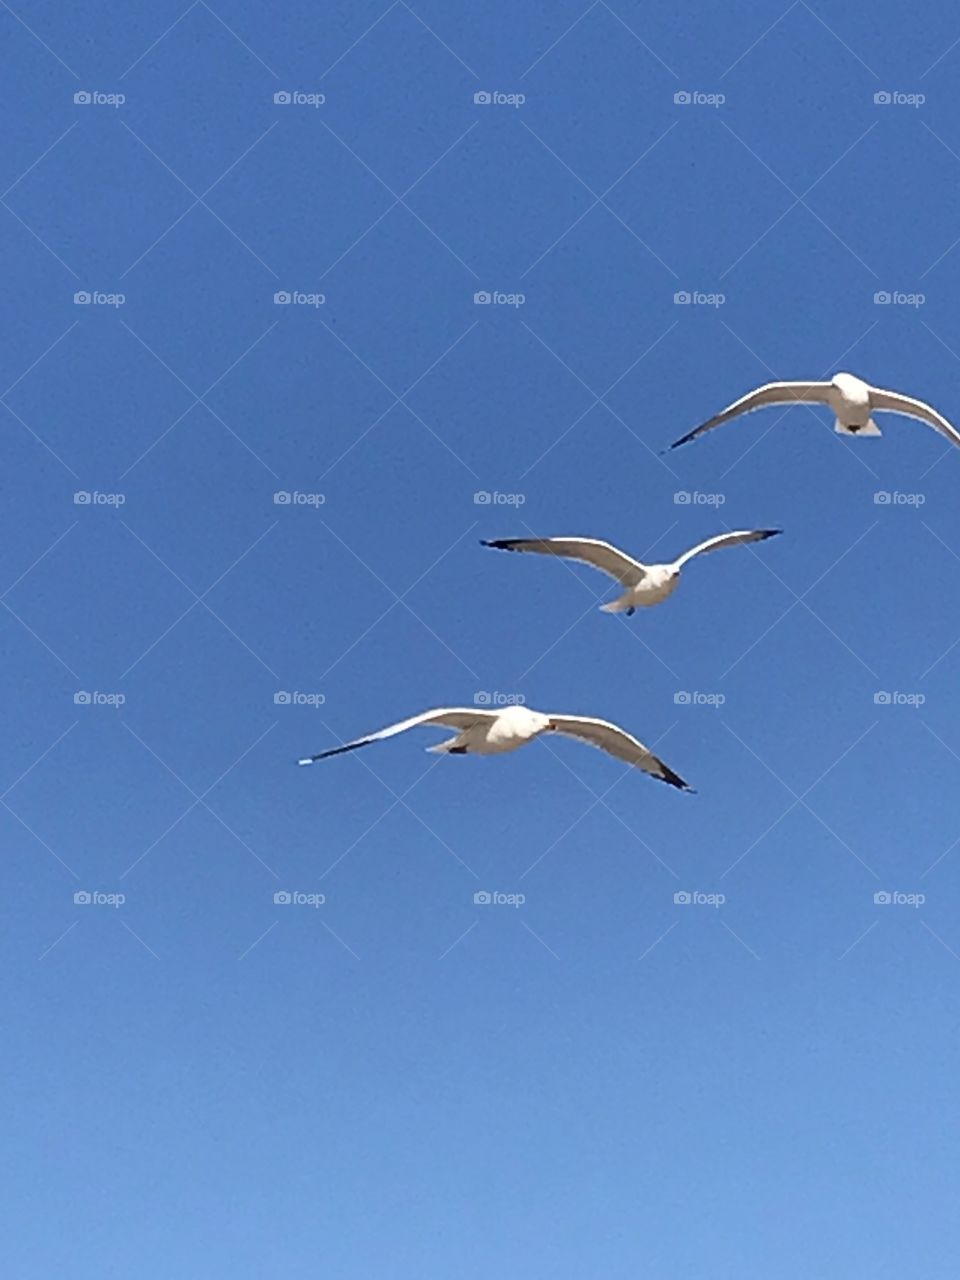 Three seagulls focusing in on a treat 